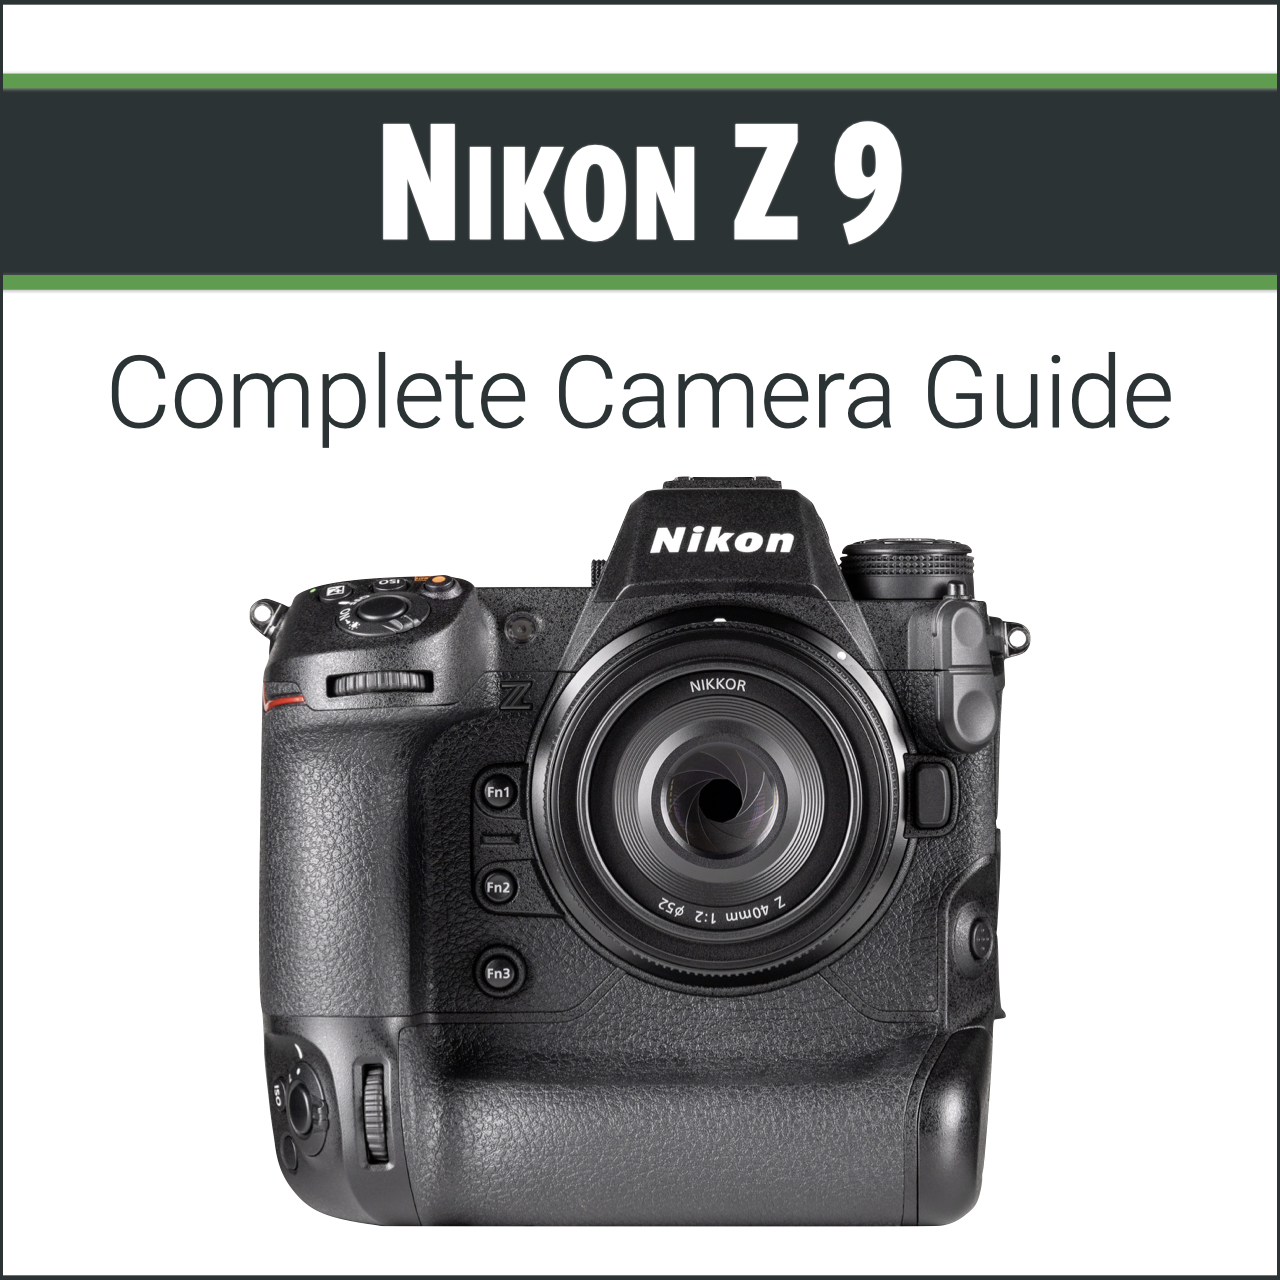 Nikon Z9: Complete Camera Guide